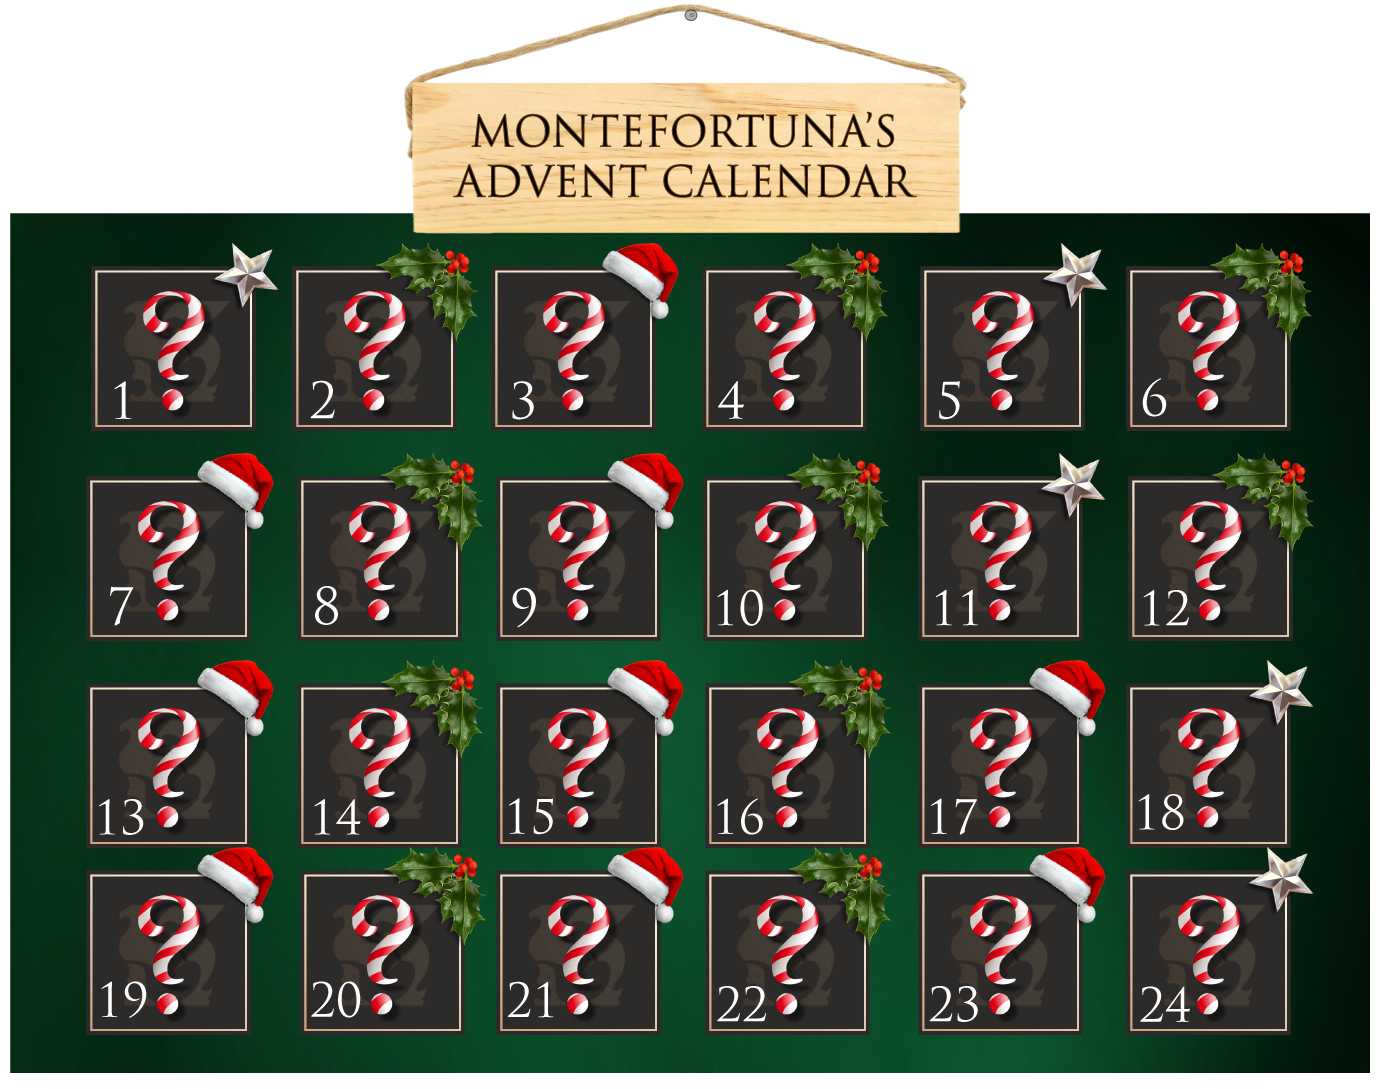 Montefortuna's Advent Calendar